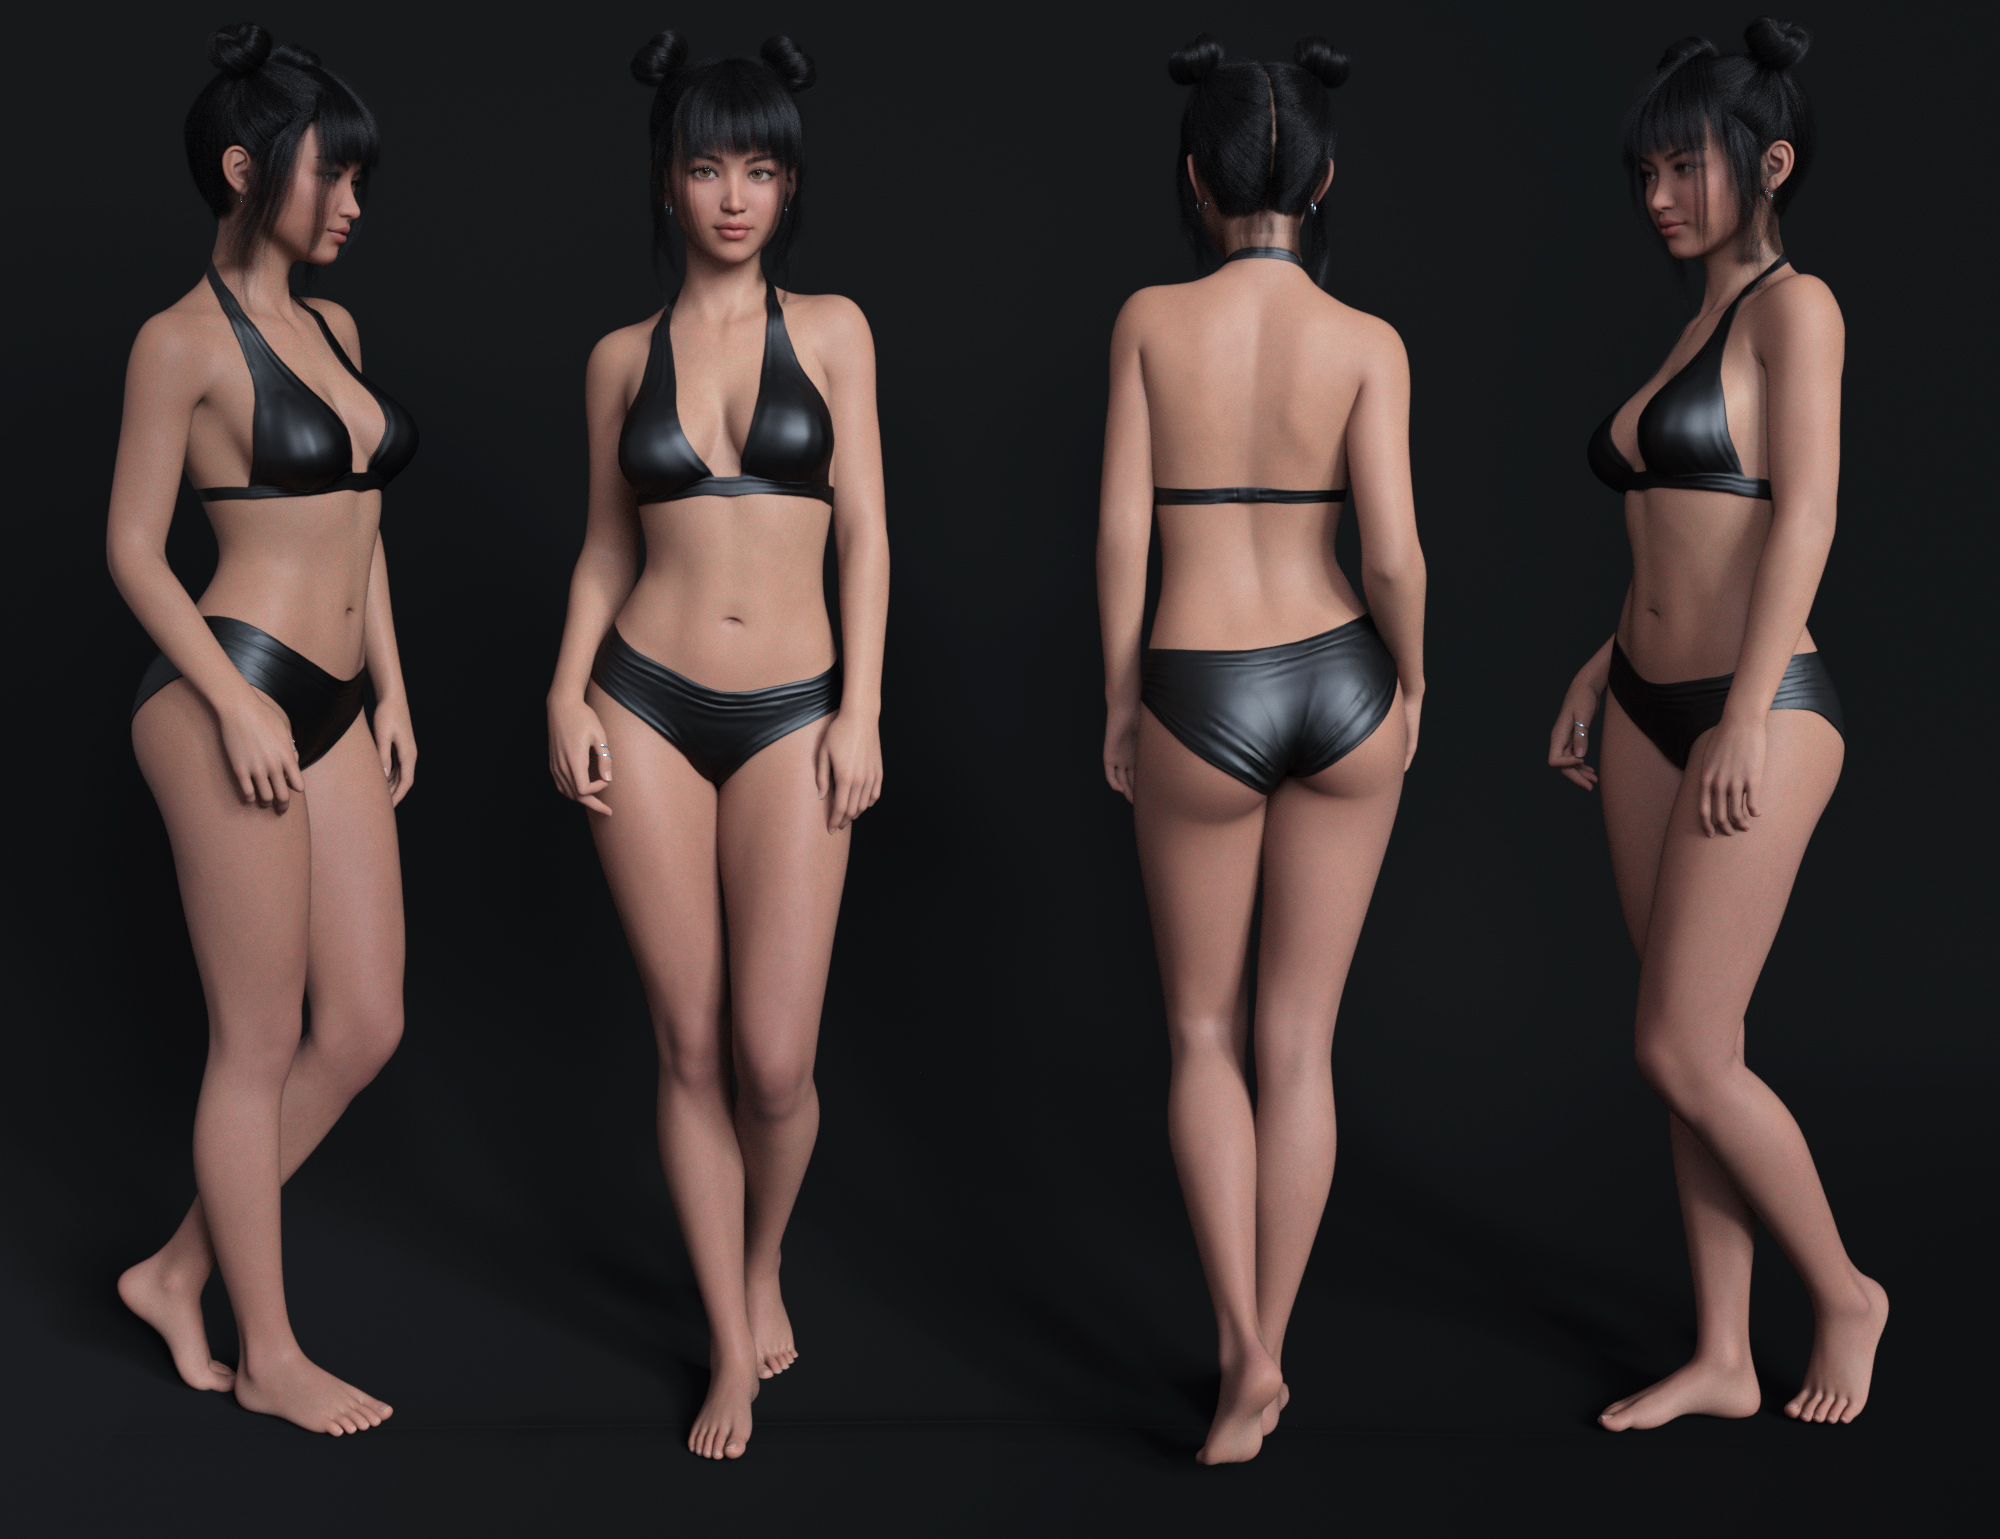 Nishi for Genesis 8 and 8.1 Female by: JessaiiRaziel, 3D Models by Daz 3D